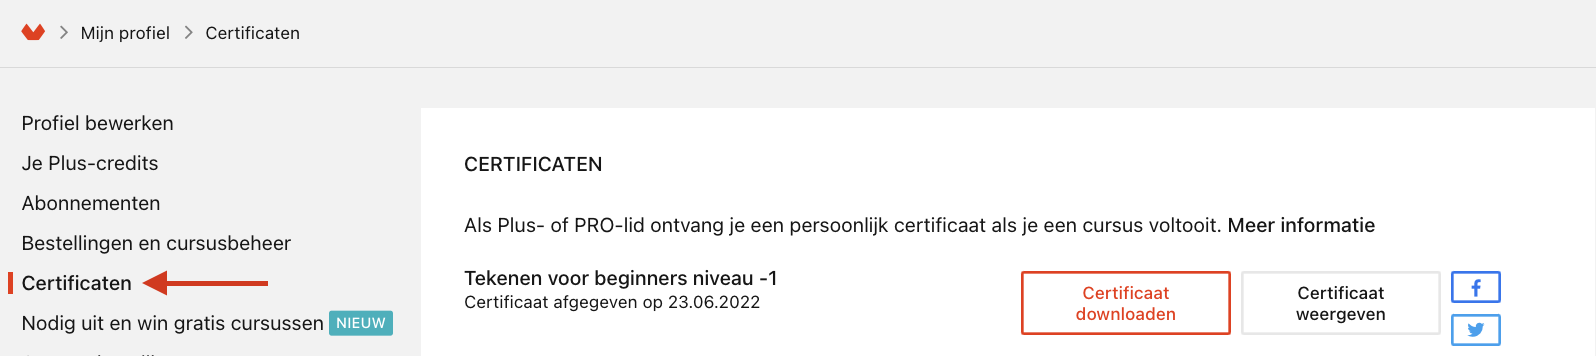 NL Download certificate web.png